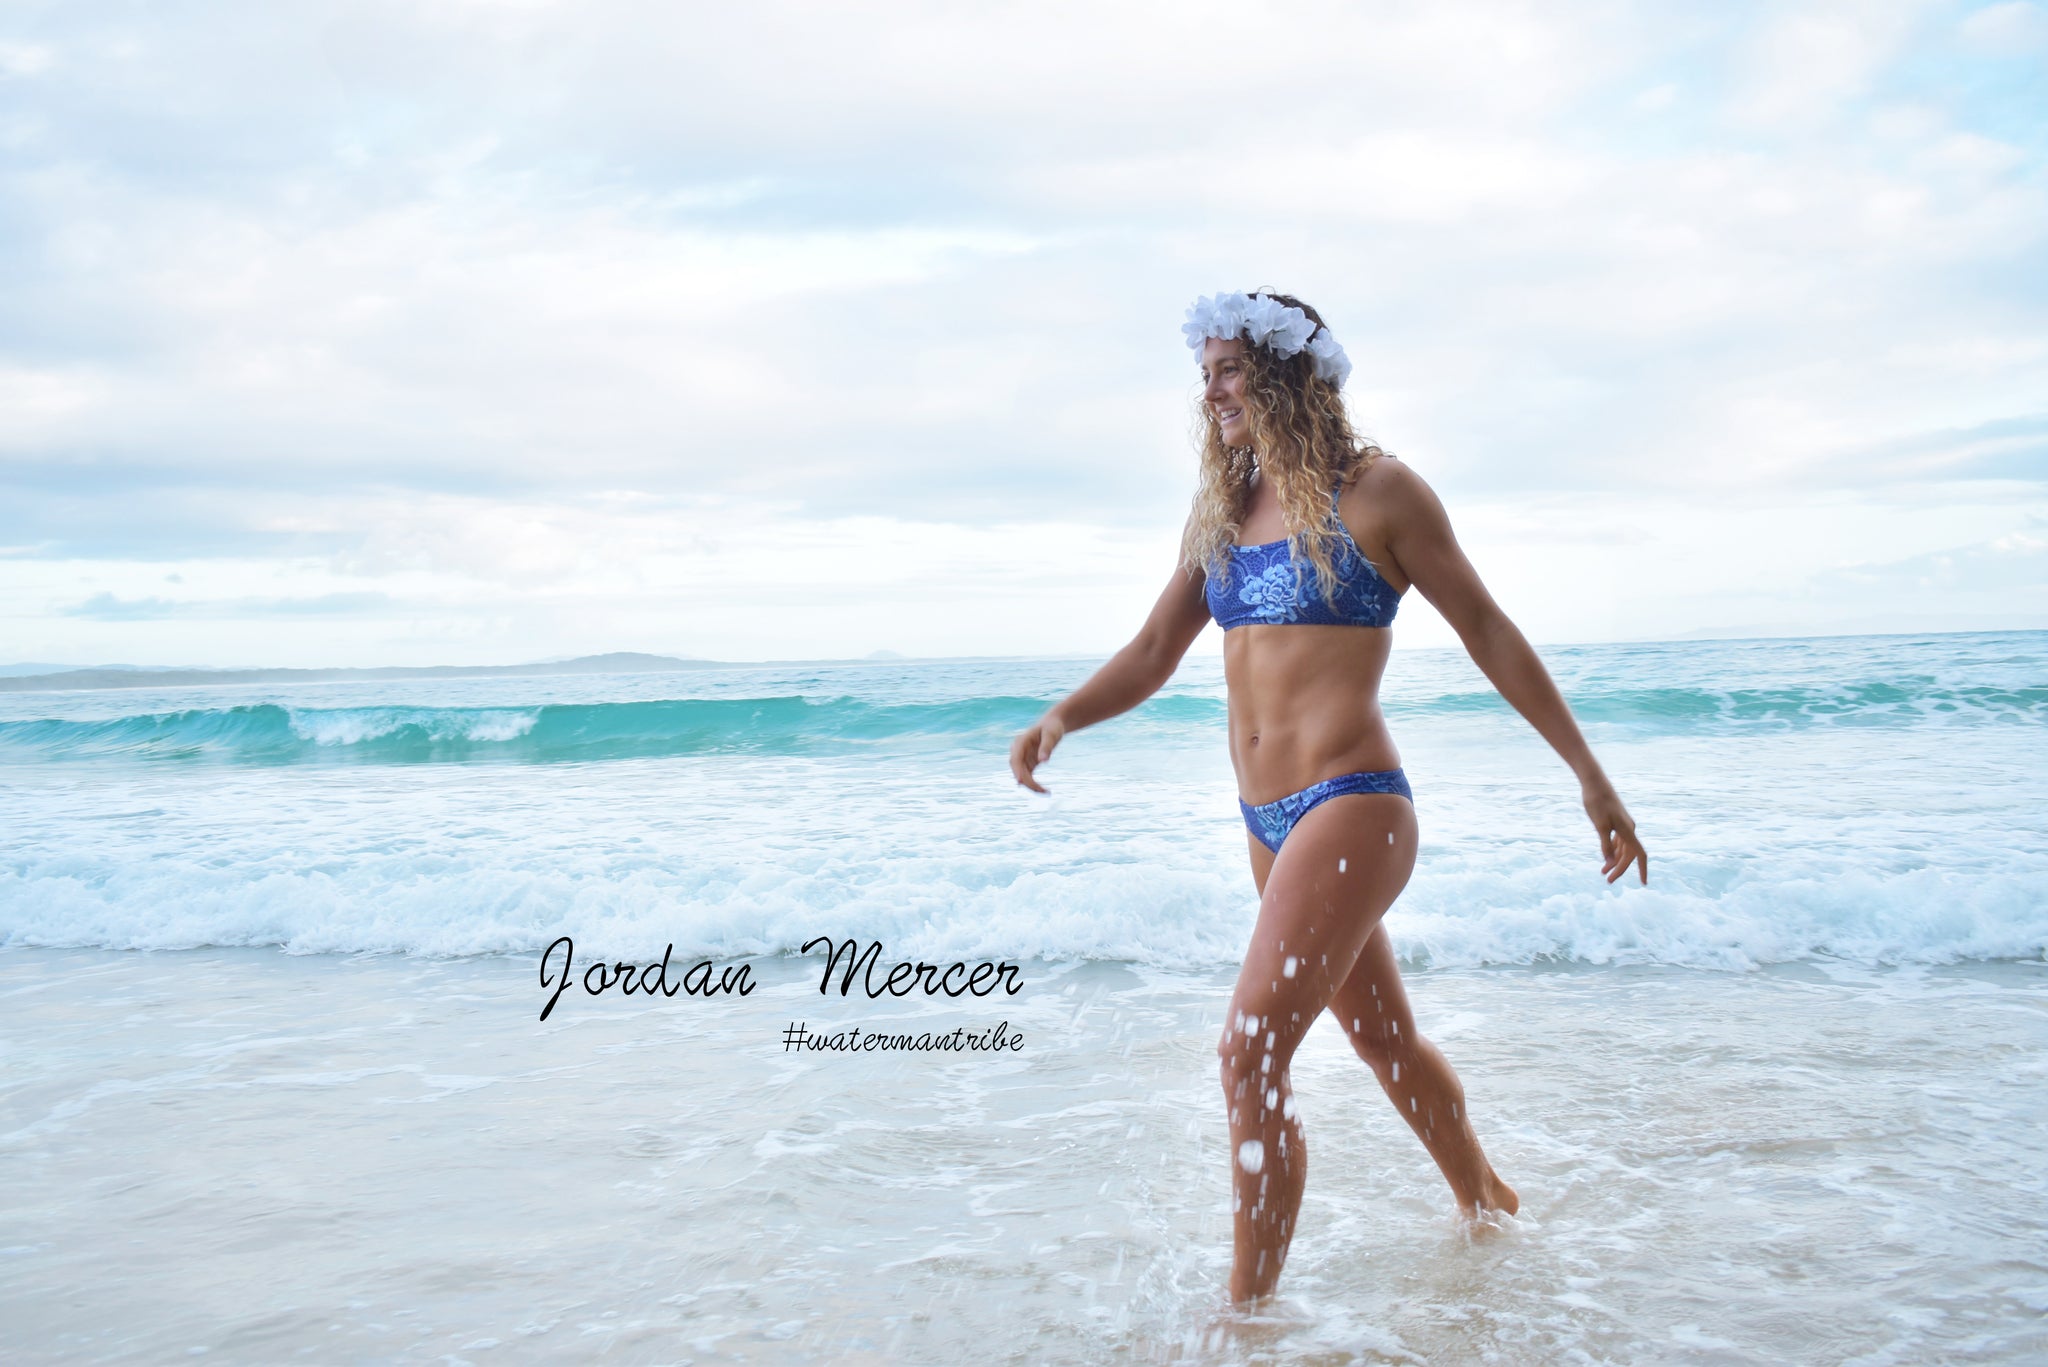 Jordan Mercer (Aus) – Waterman Store NZ